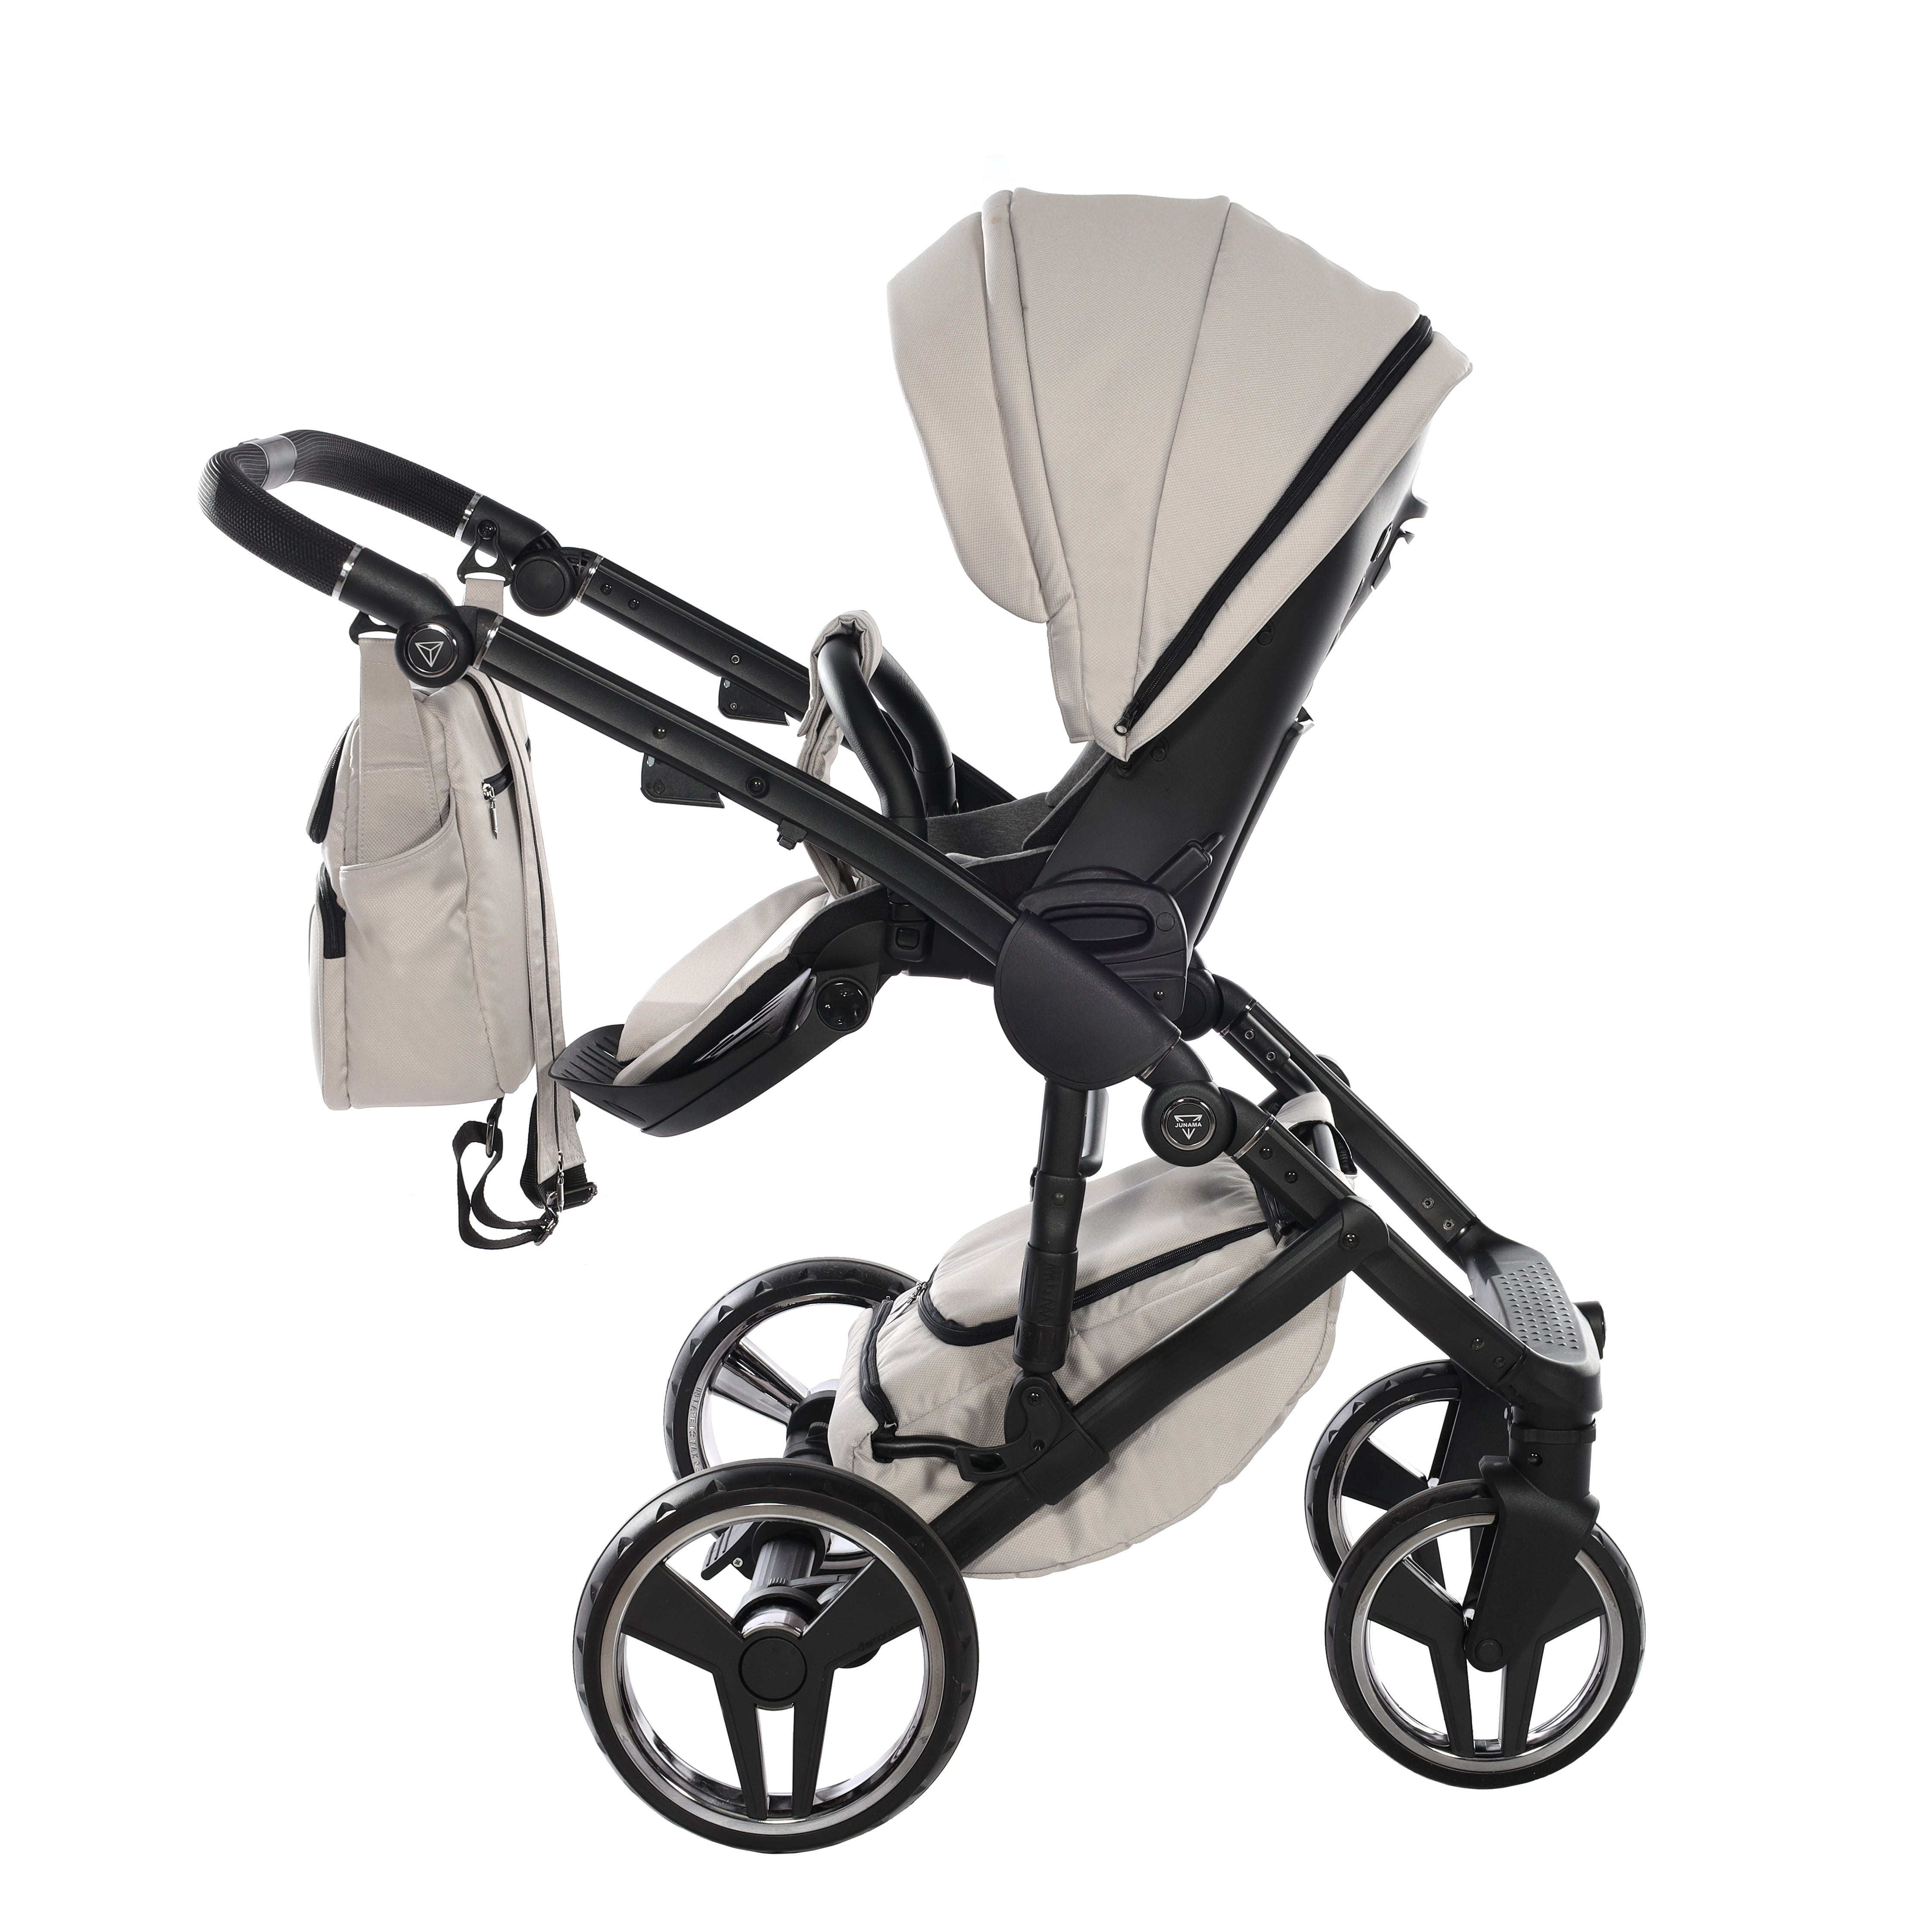 Junama BASIC, baby stroller and bassinet 2 in 1 - LIGHT BEIGE, Code number: JUNBSC05